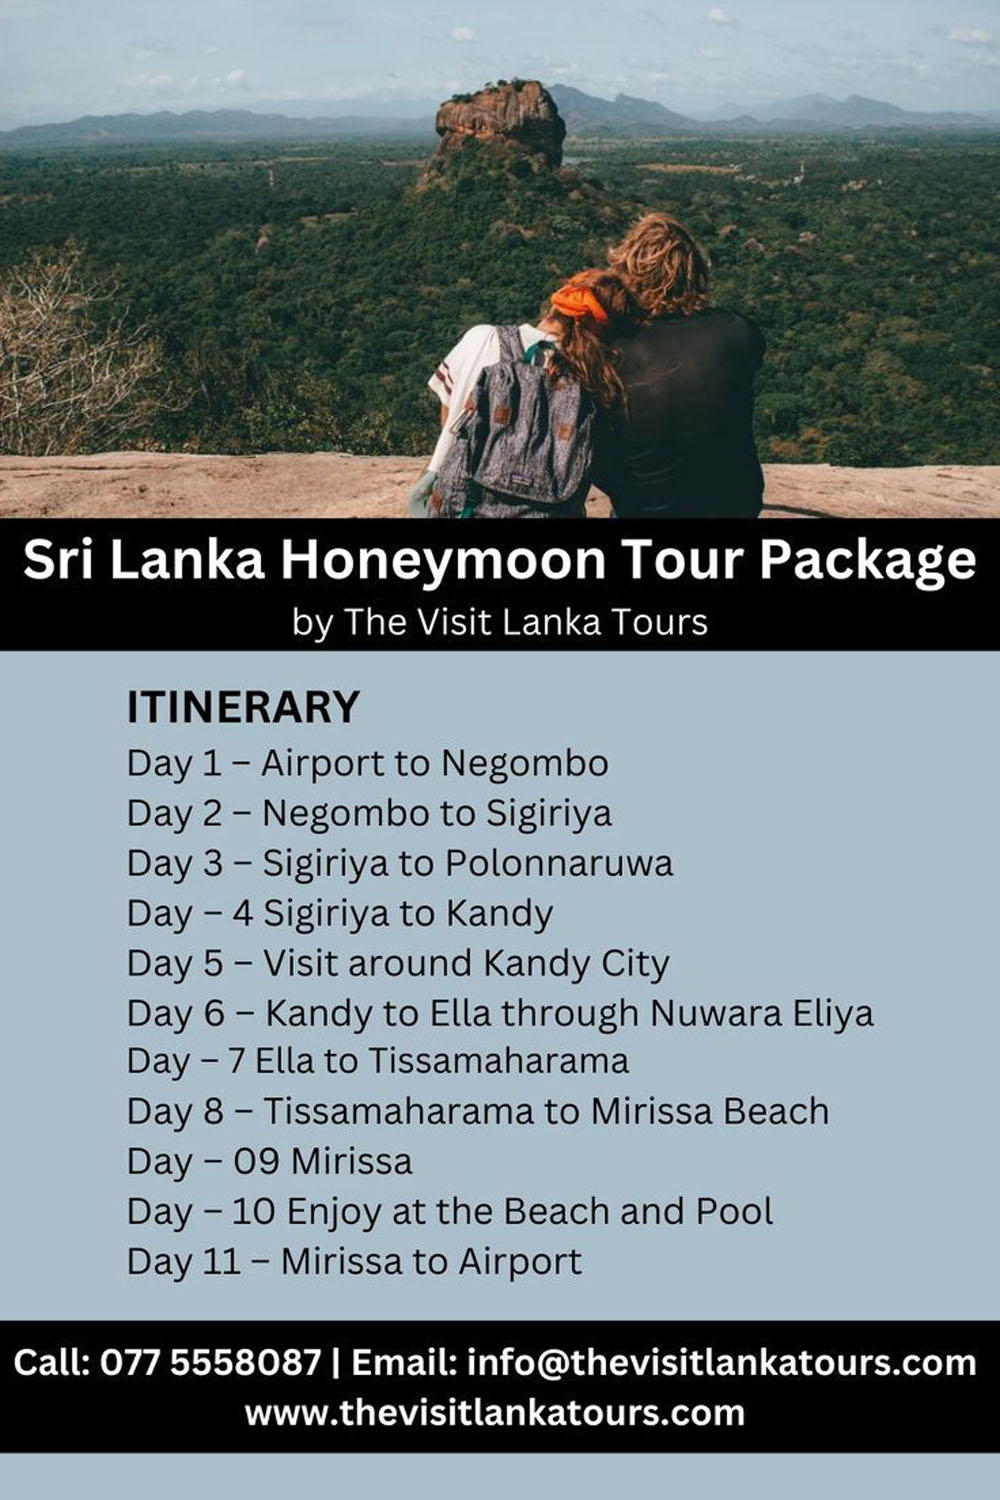 Sri Lanka Honeymoon Itinerary by The Visit Lanka Tours